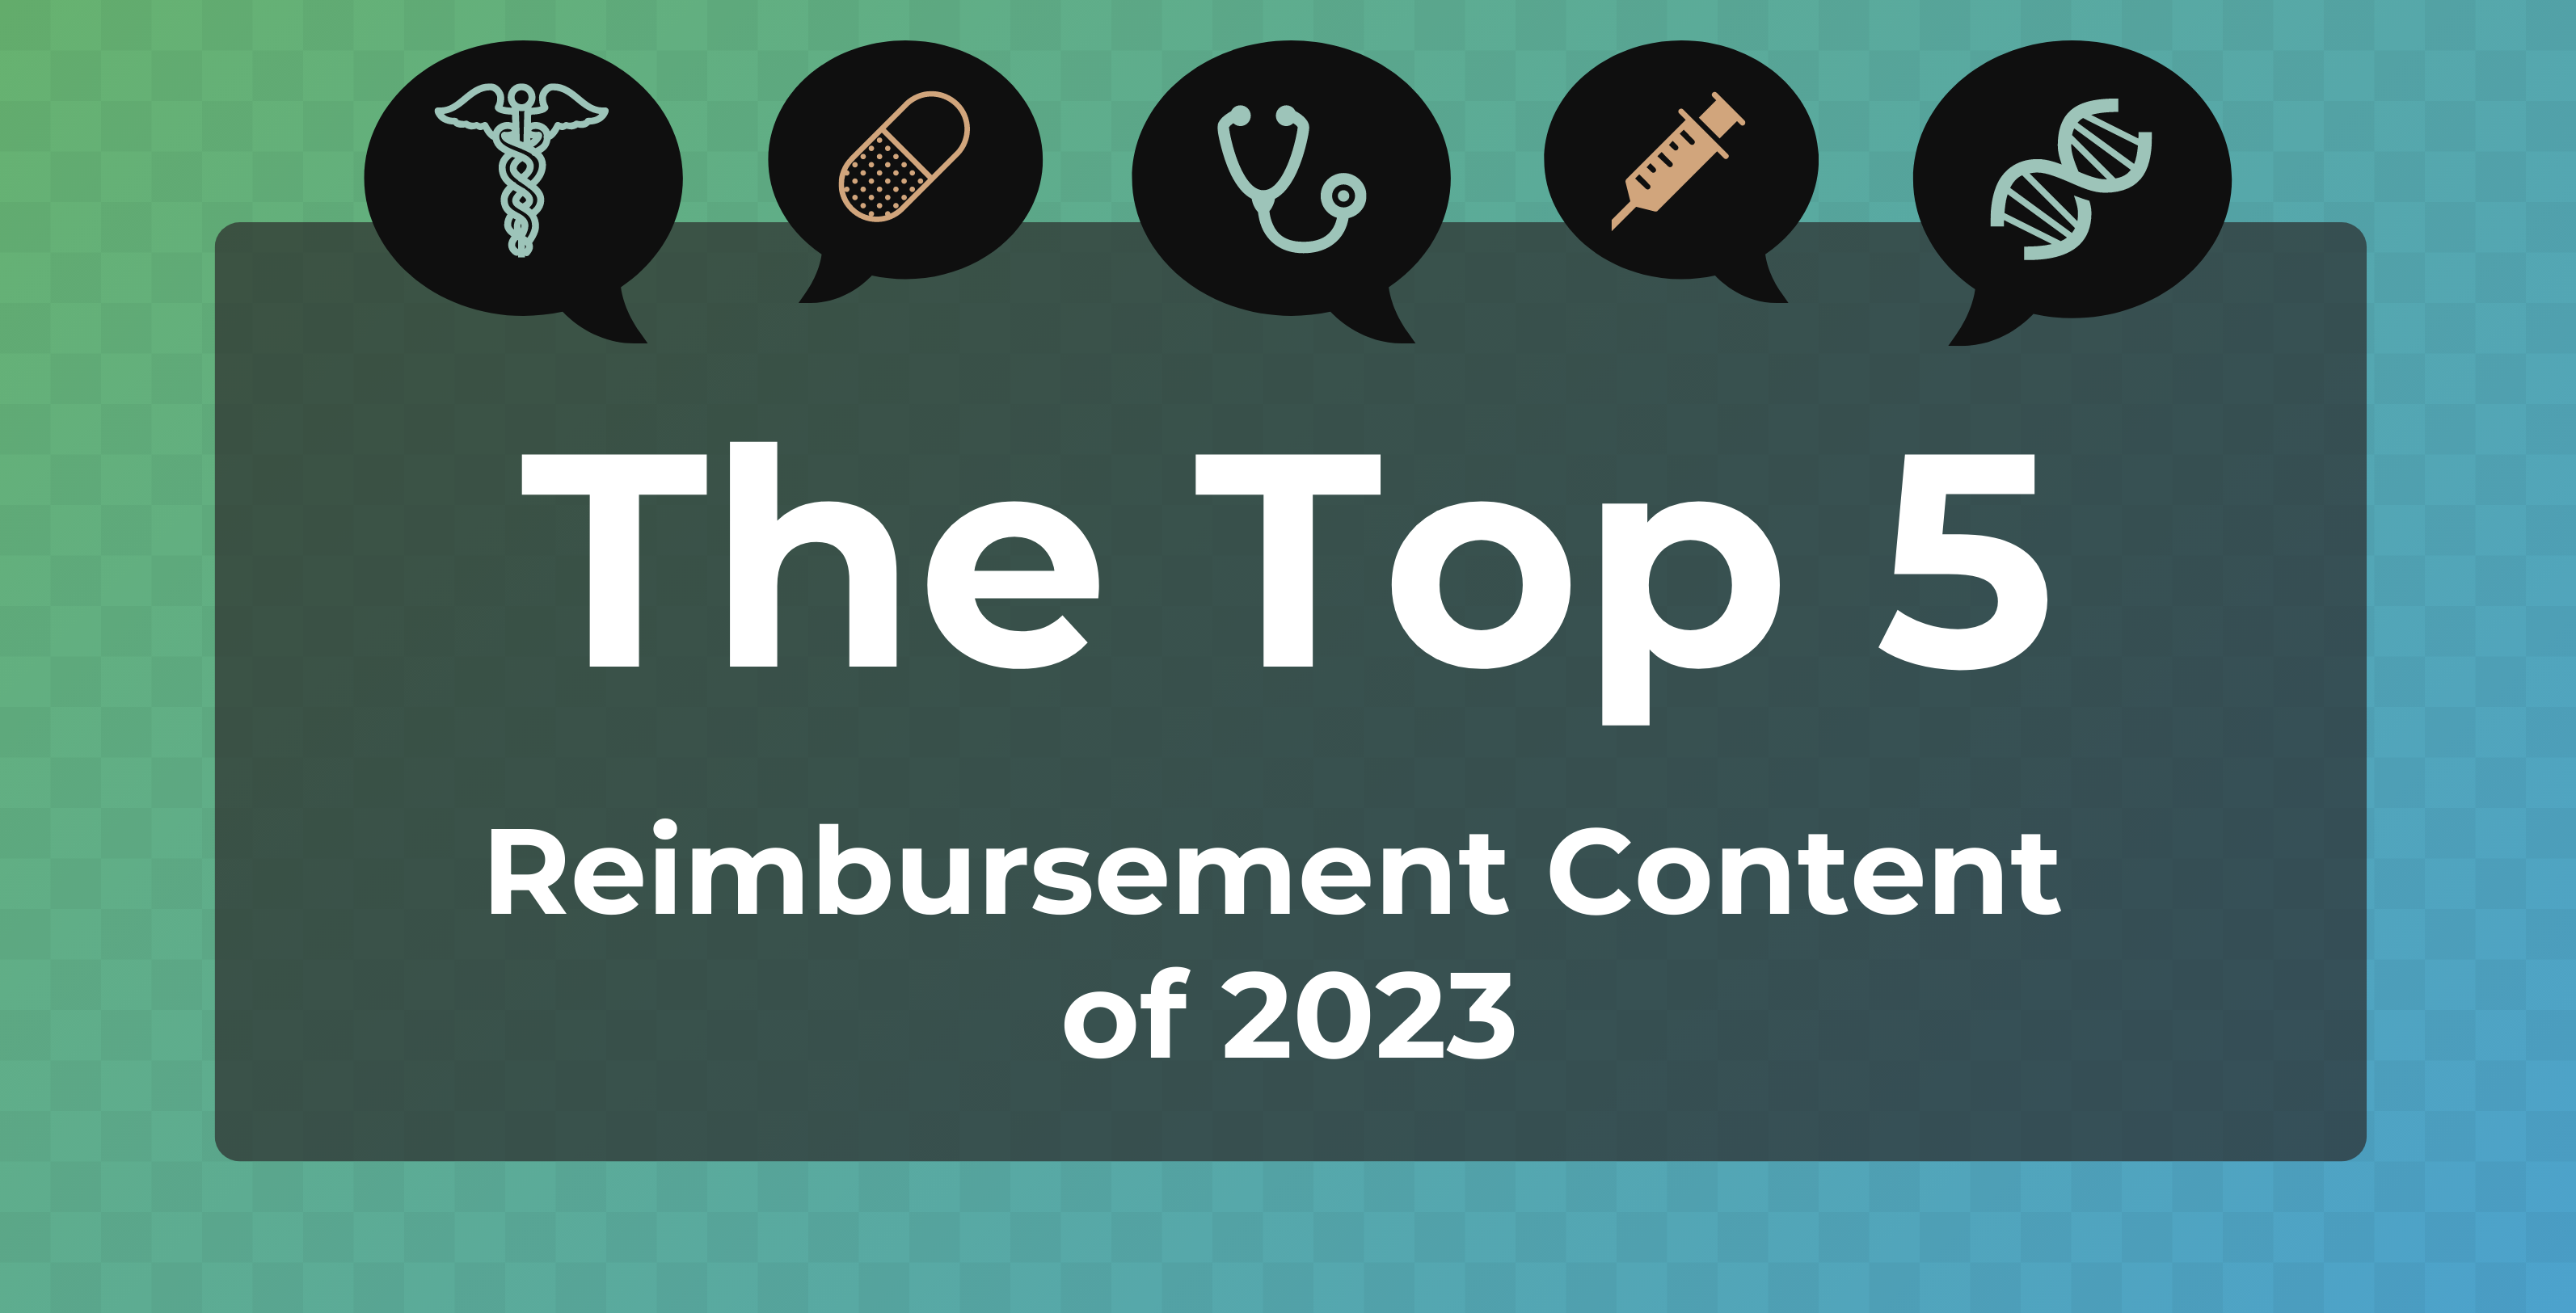 The Top 5 Reimbursement Content of 2023